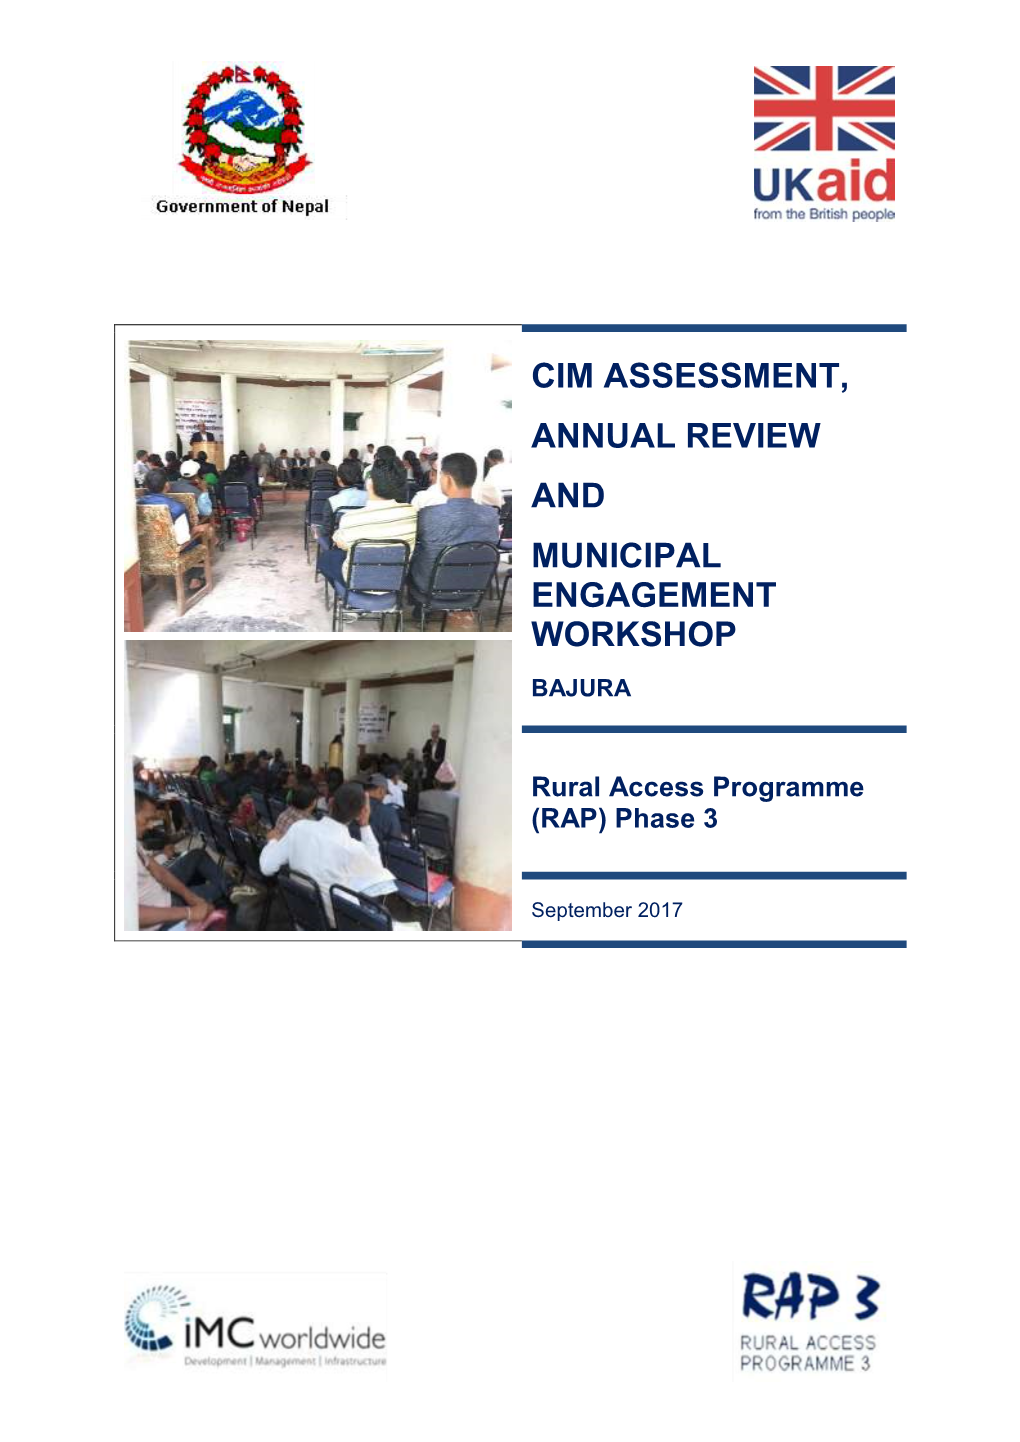 Cim Assessment, Annual Review and Municipal Engagement Workshop Bajura